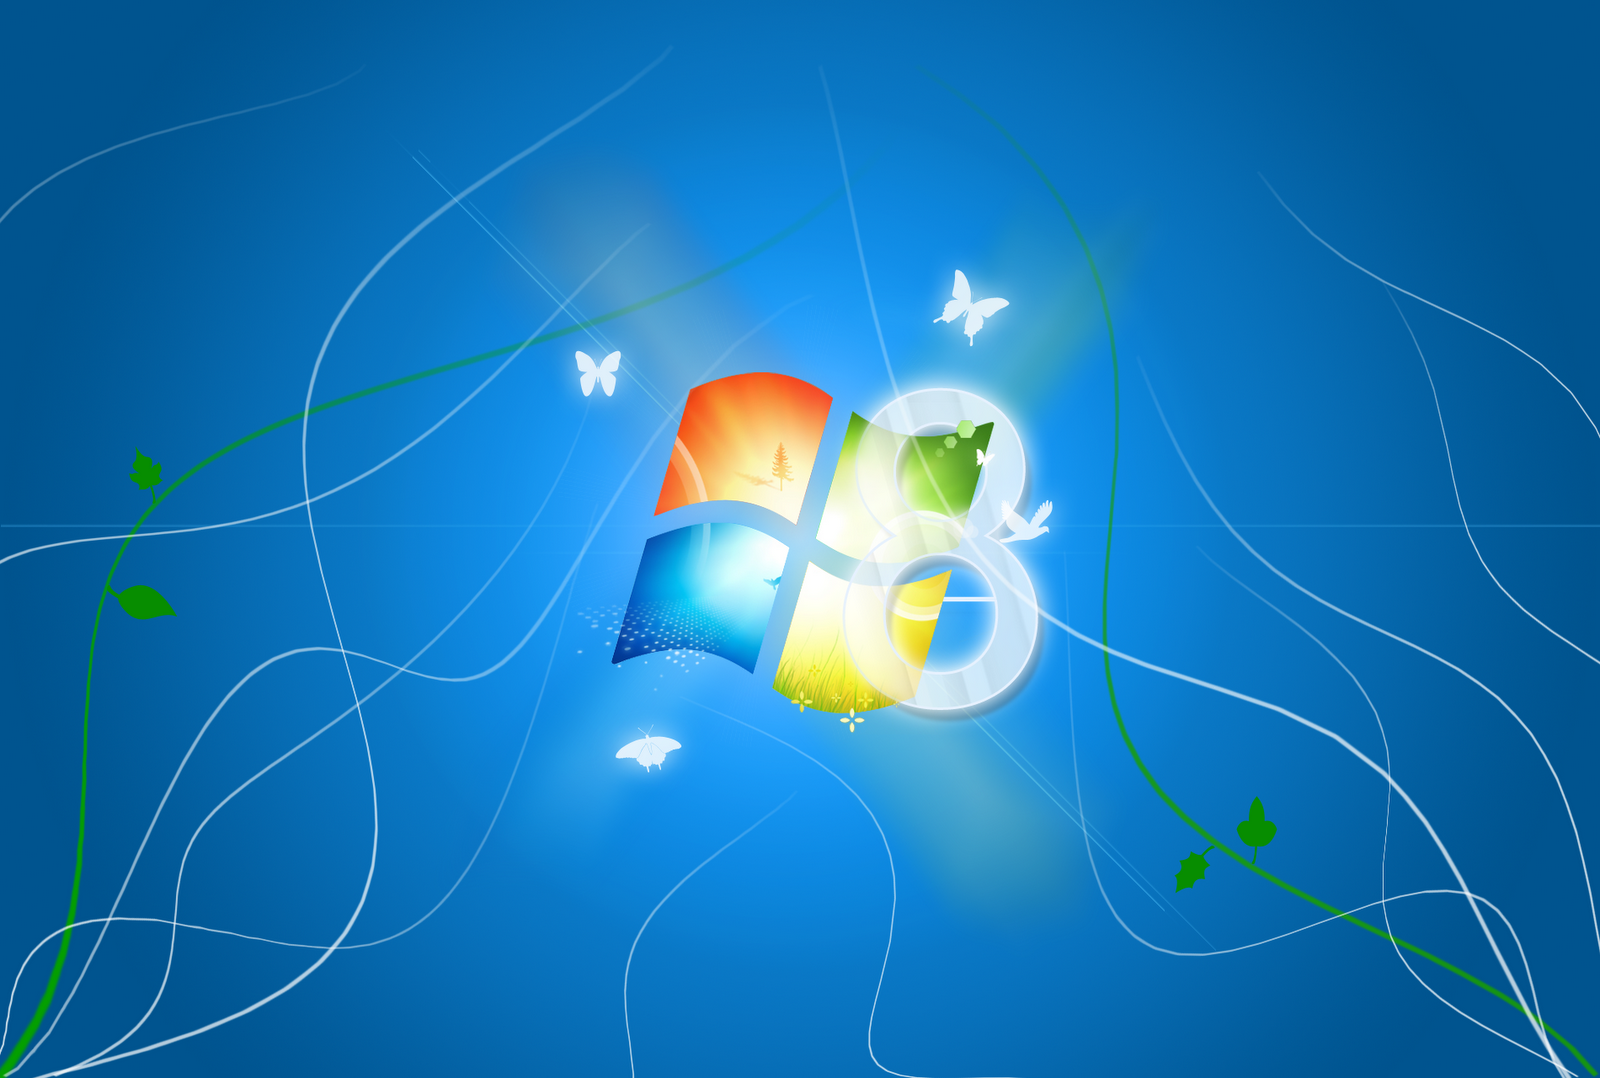 Windows 8 Wallpapers 1